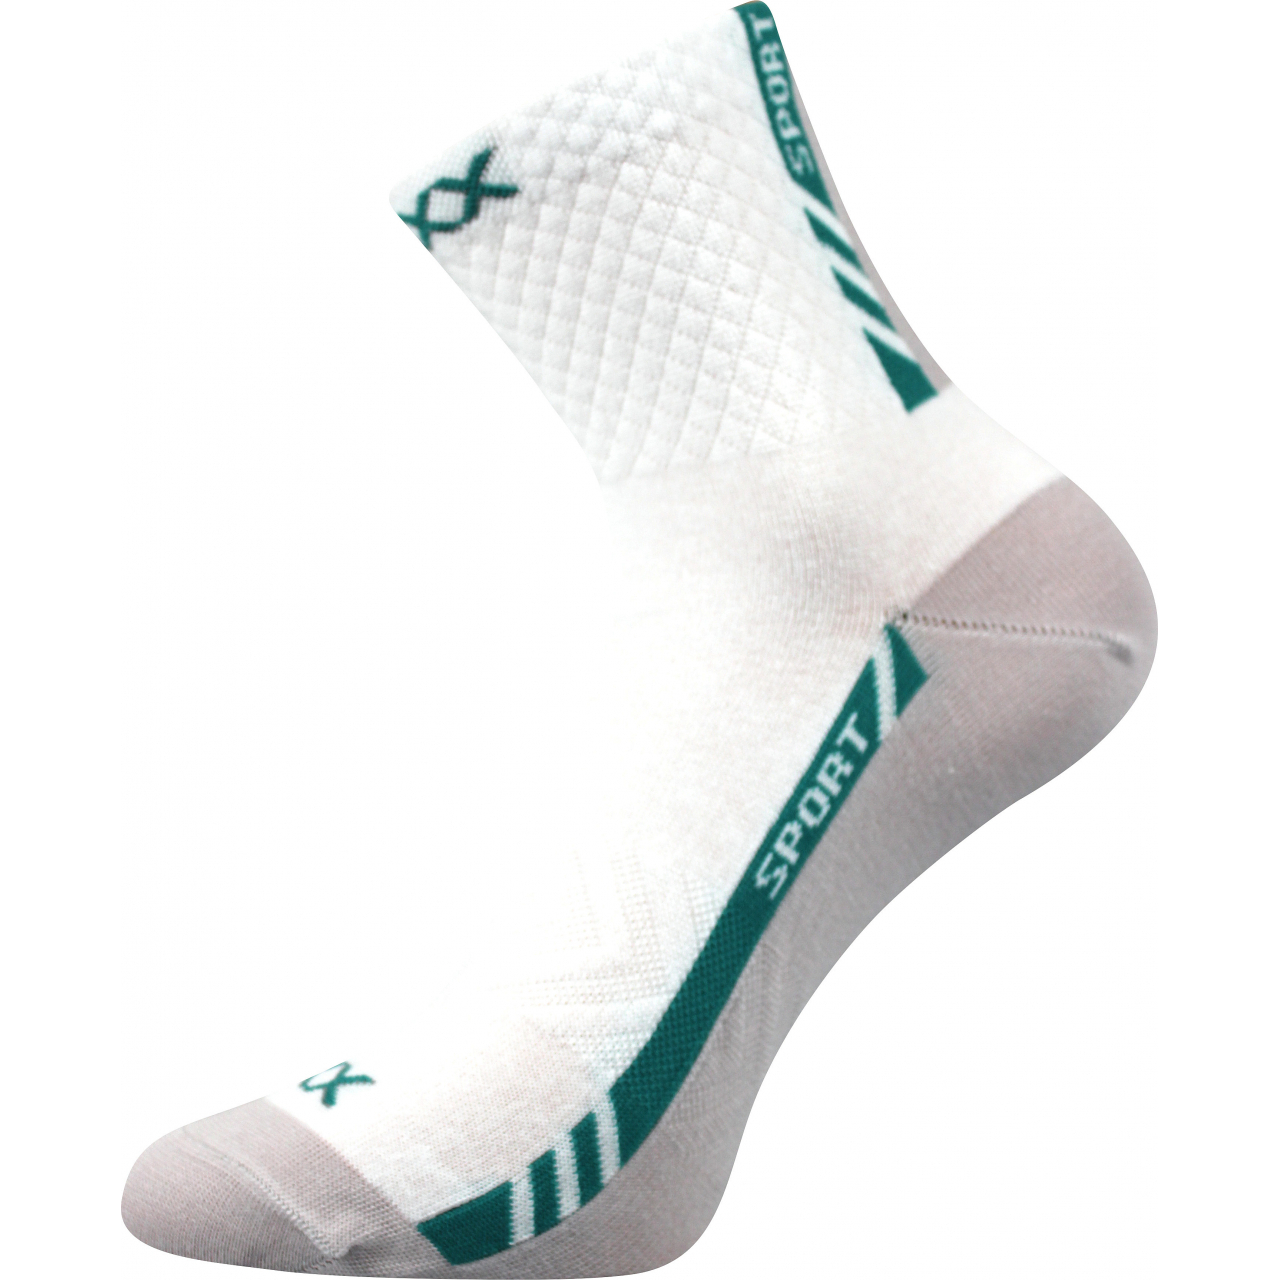 Ponožky sportovní Voxx Pius - bílé-šedé, 47-50